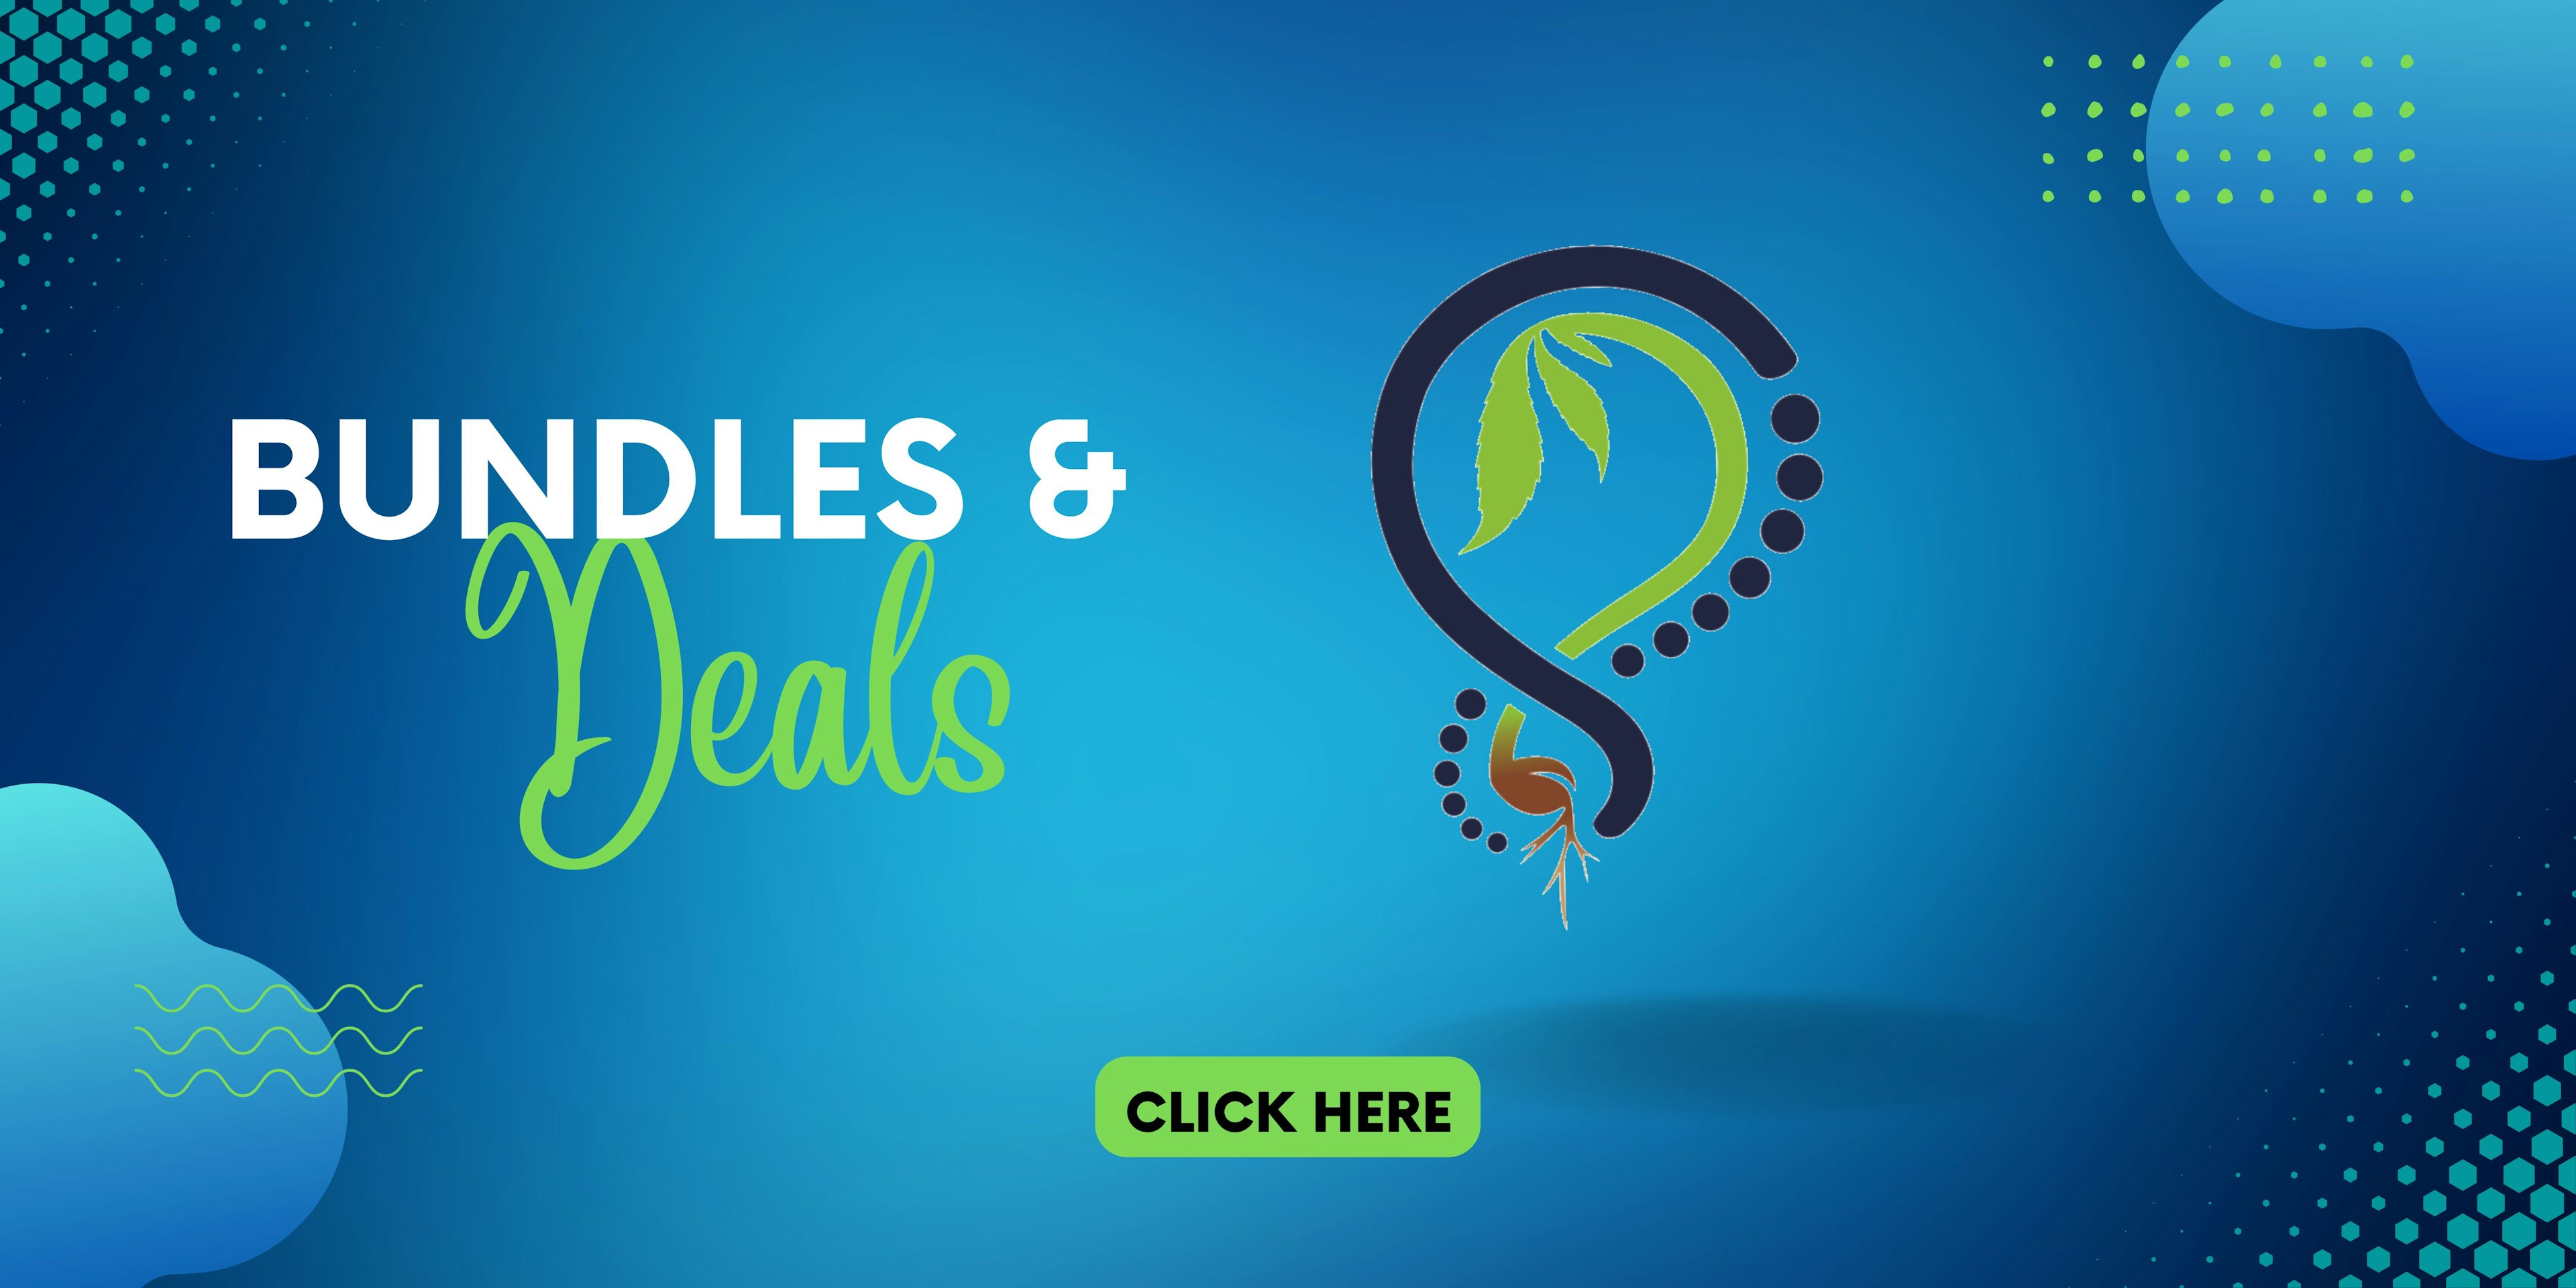 Apotho Bundles & Deals